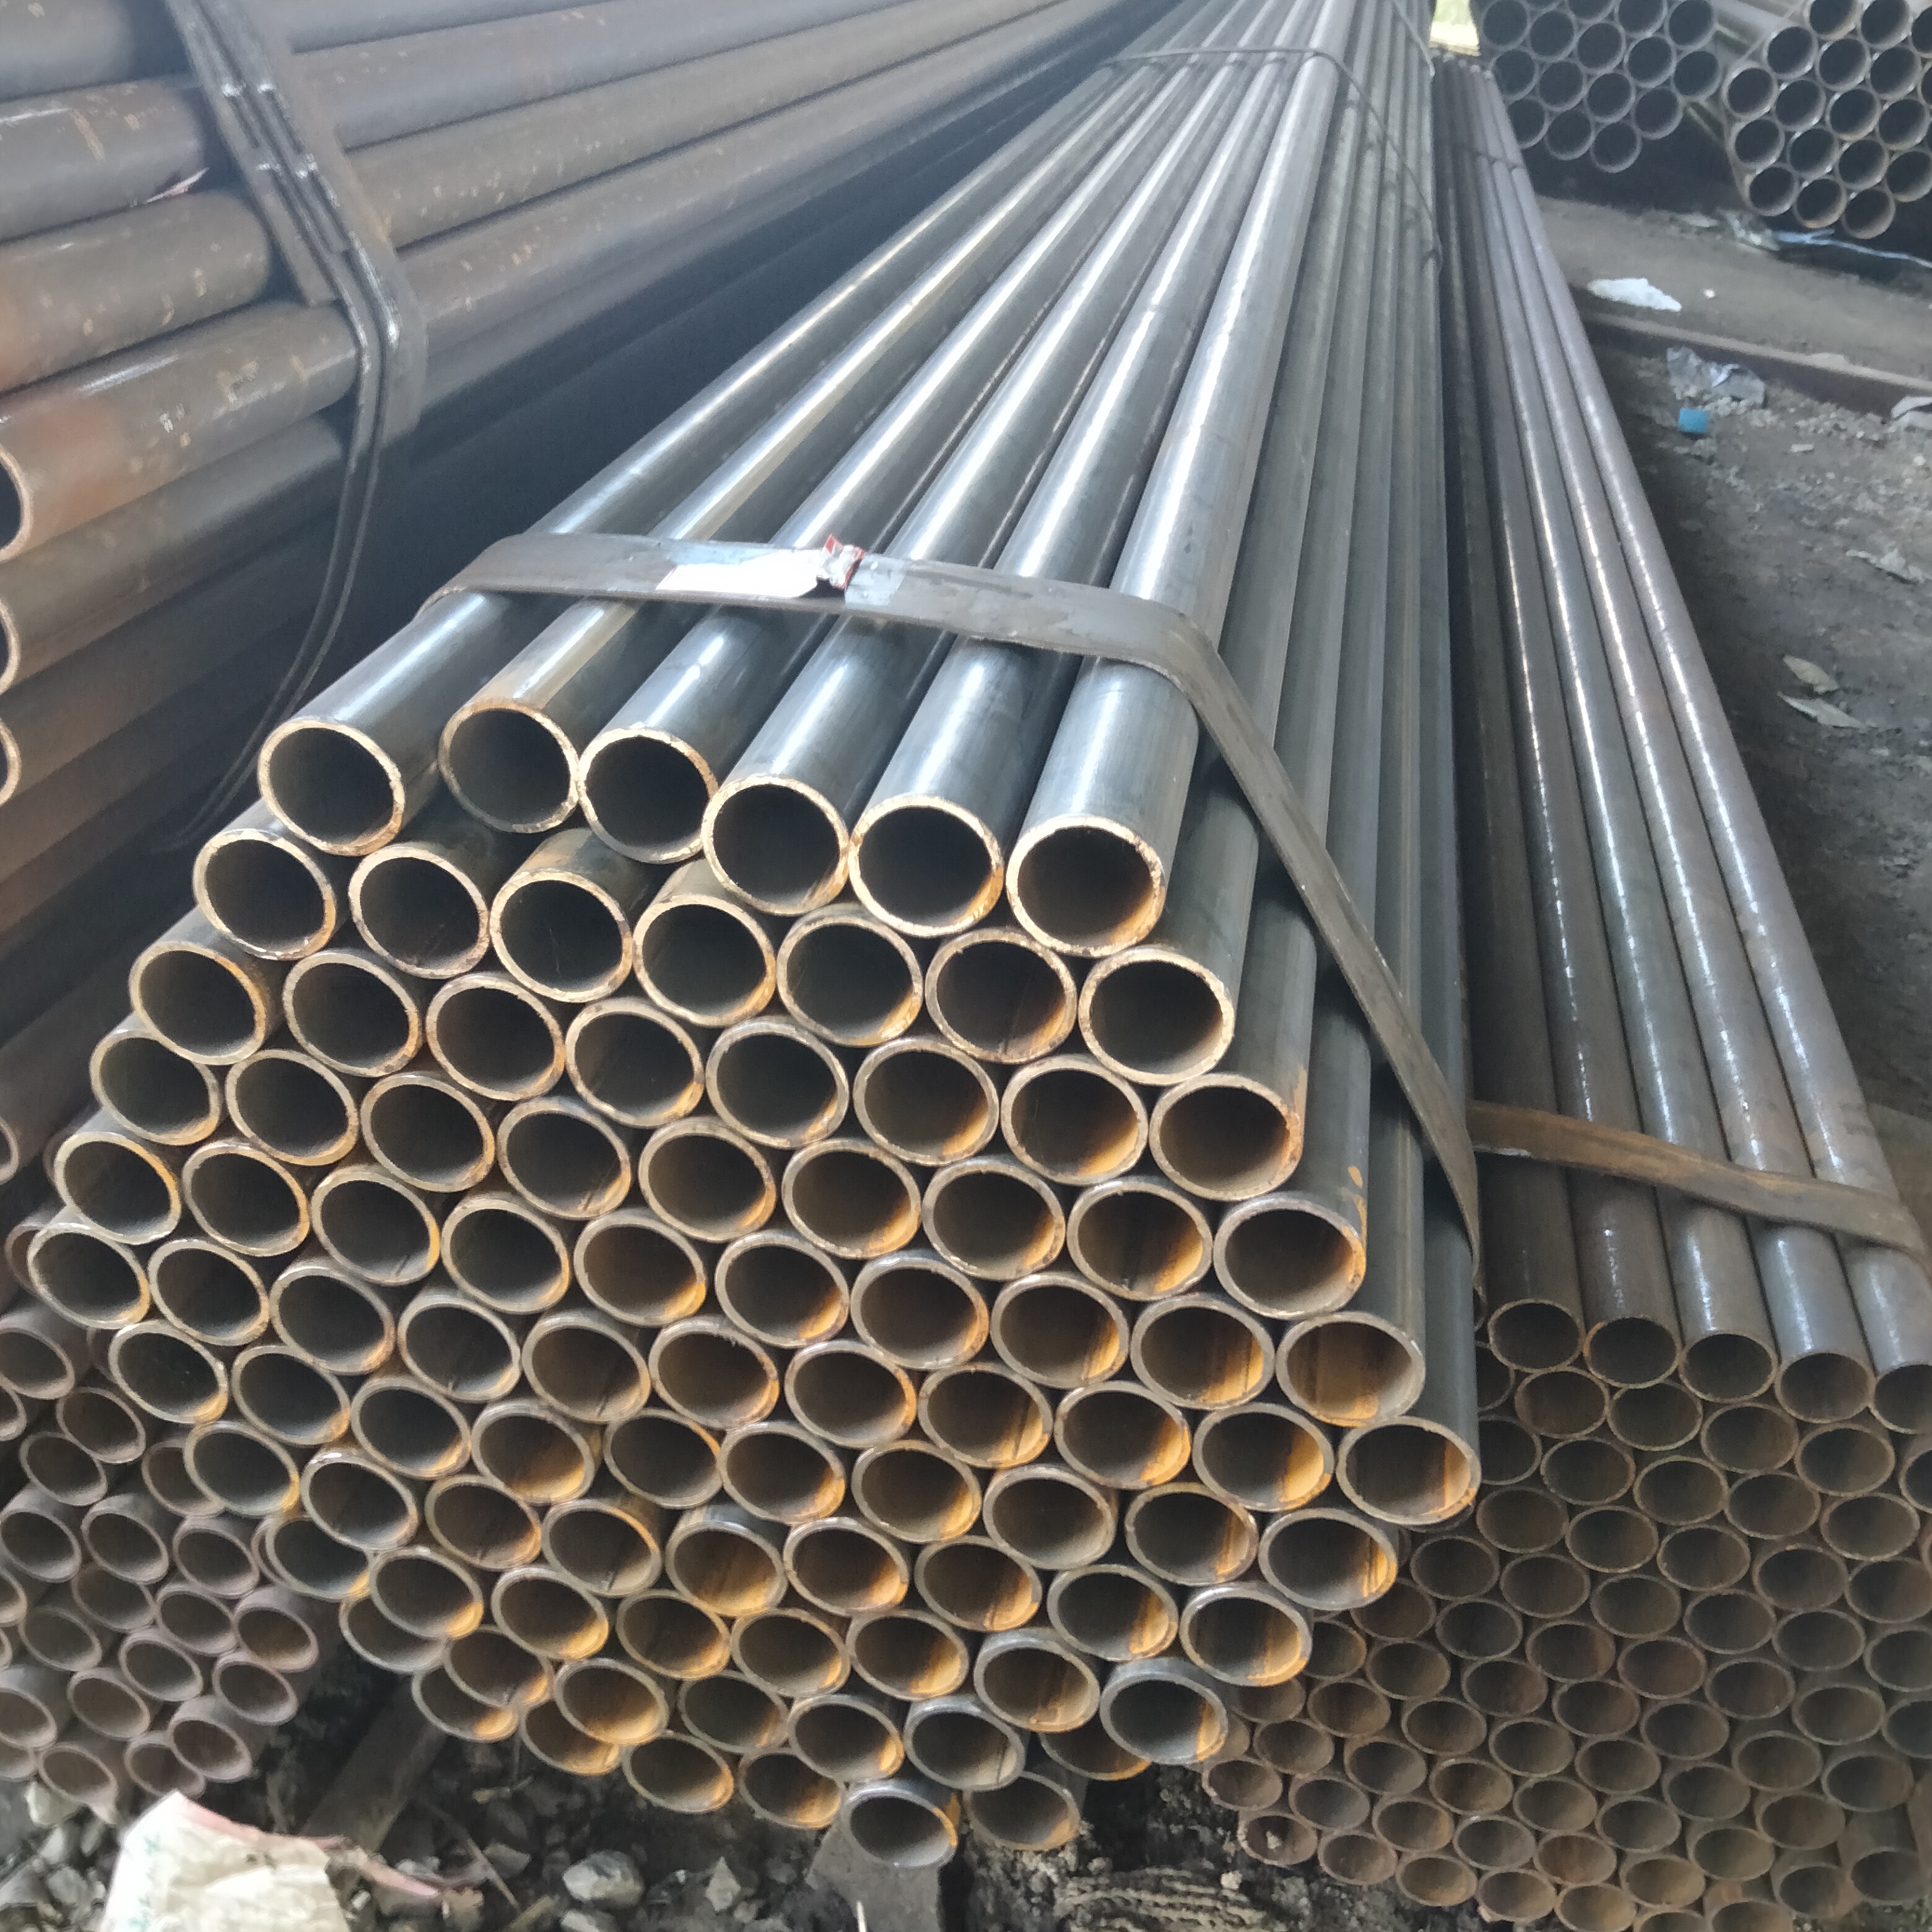 Shanghai Zhongzeyi Metal Materials Co., Ltd. welding steel pipe processing